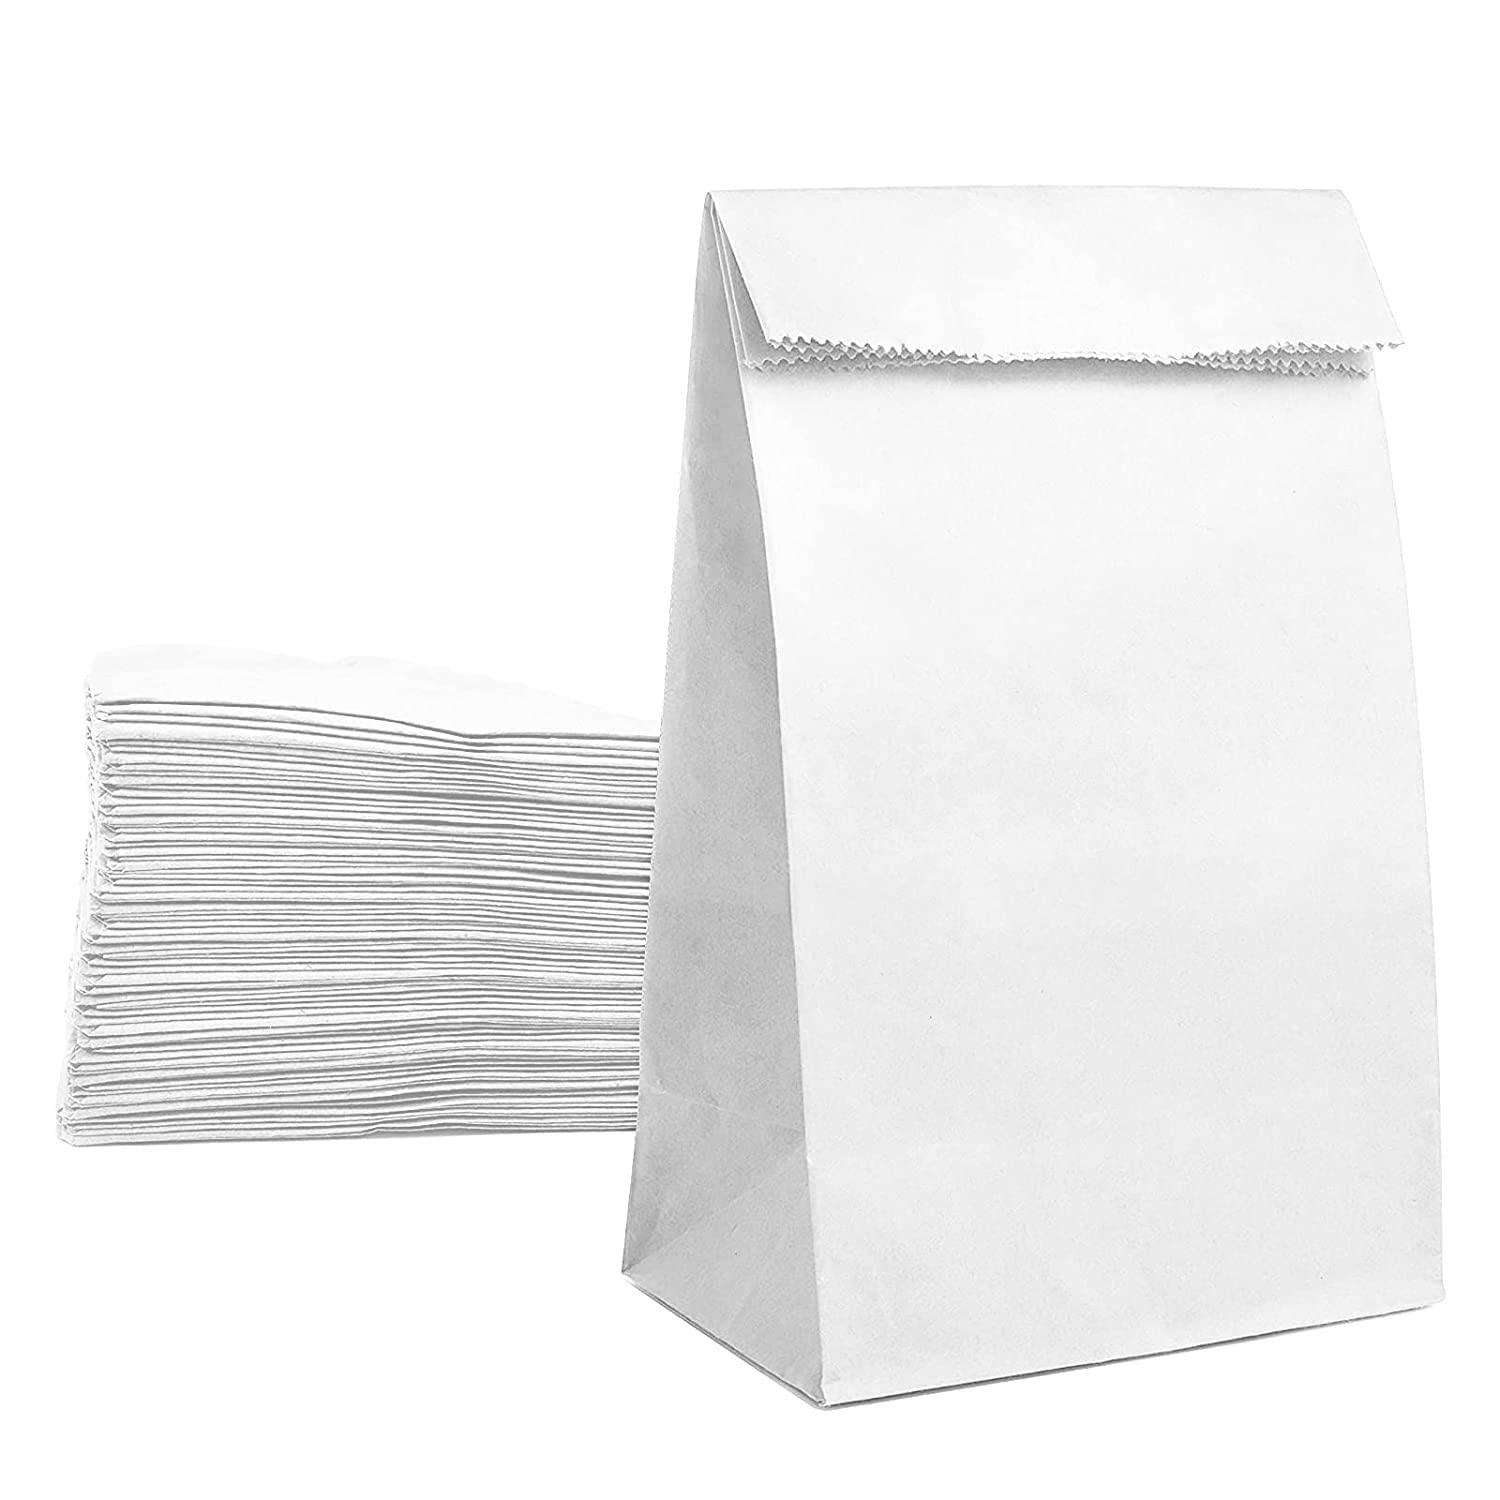 Perfect Stix 4lb Kraft White Paper Bags - Pack of 500 Count (Kraft White  Bag 4lb) 4lb-Pack of 500ct